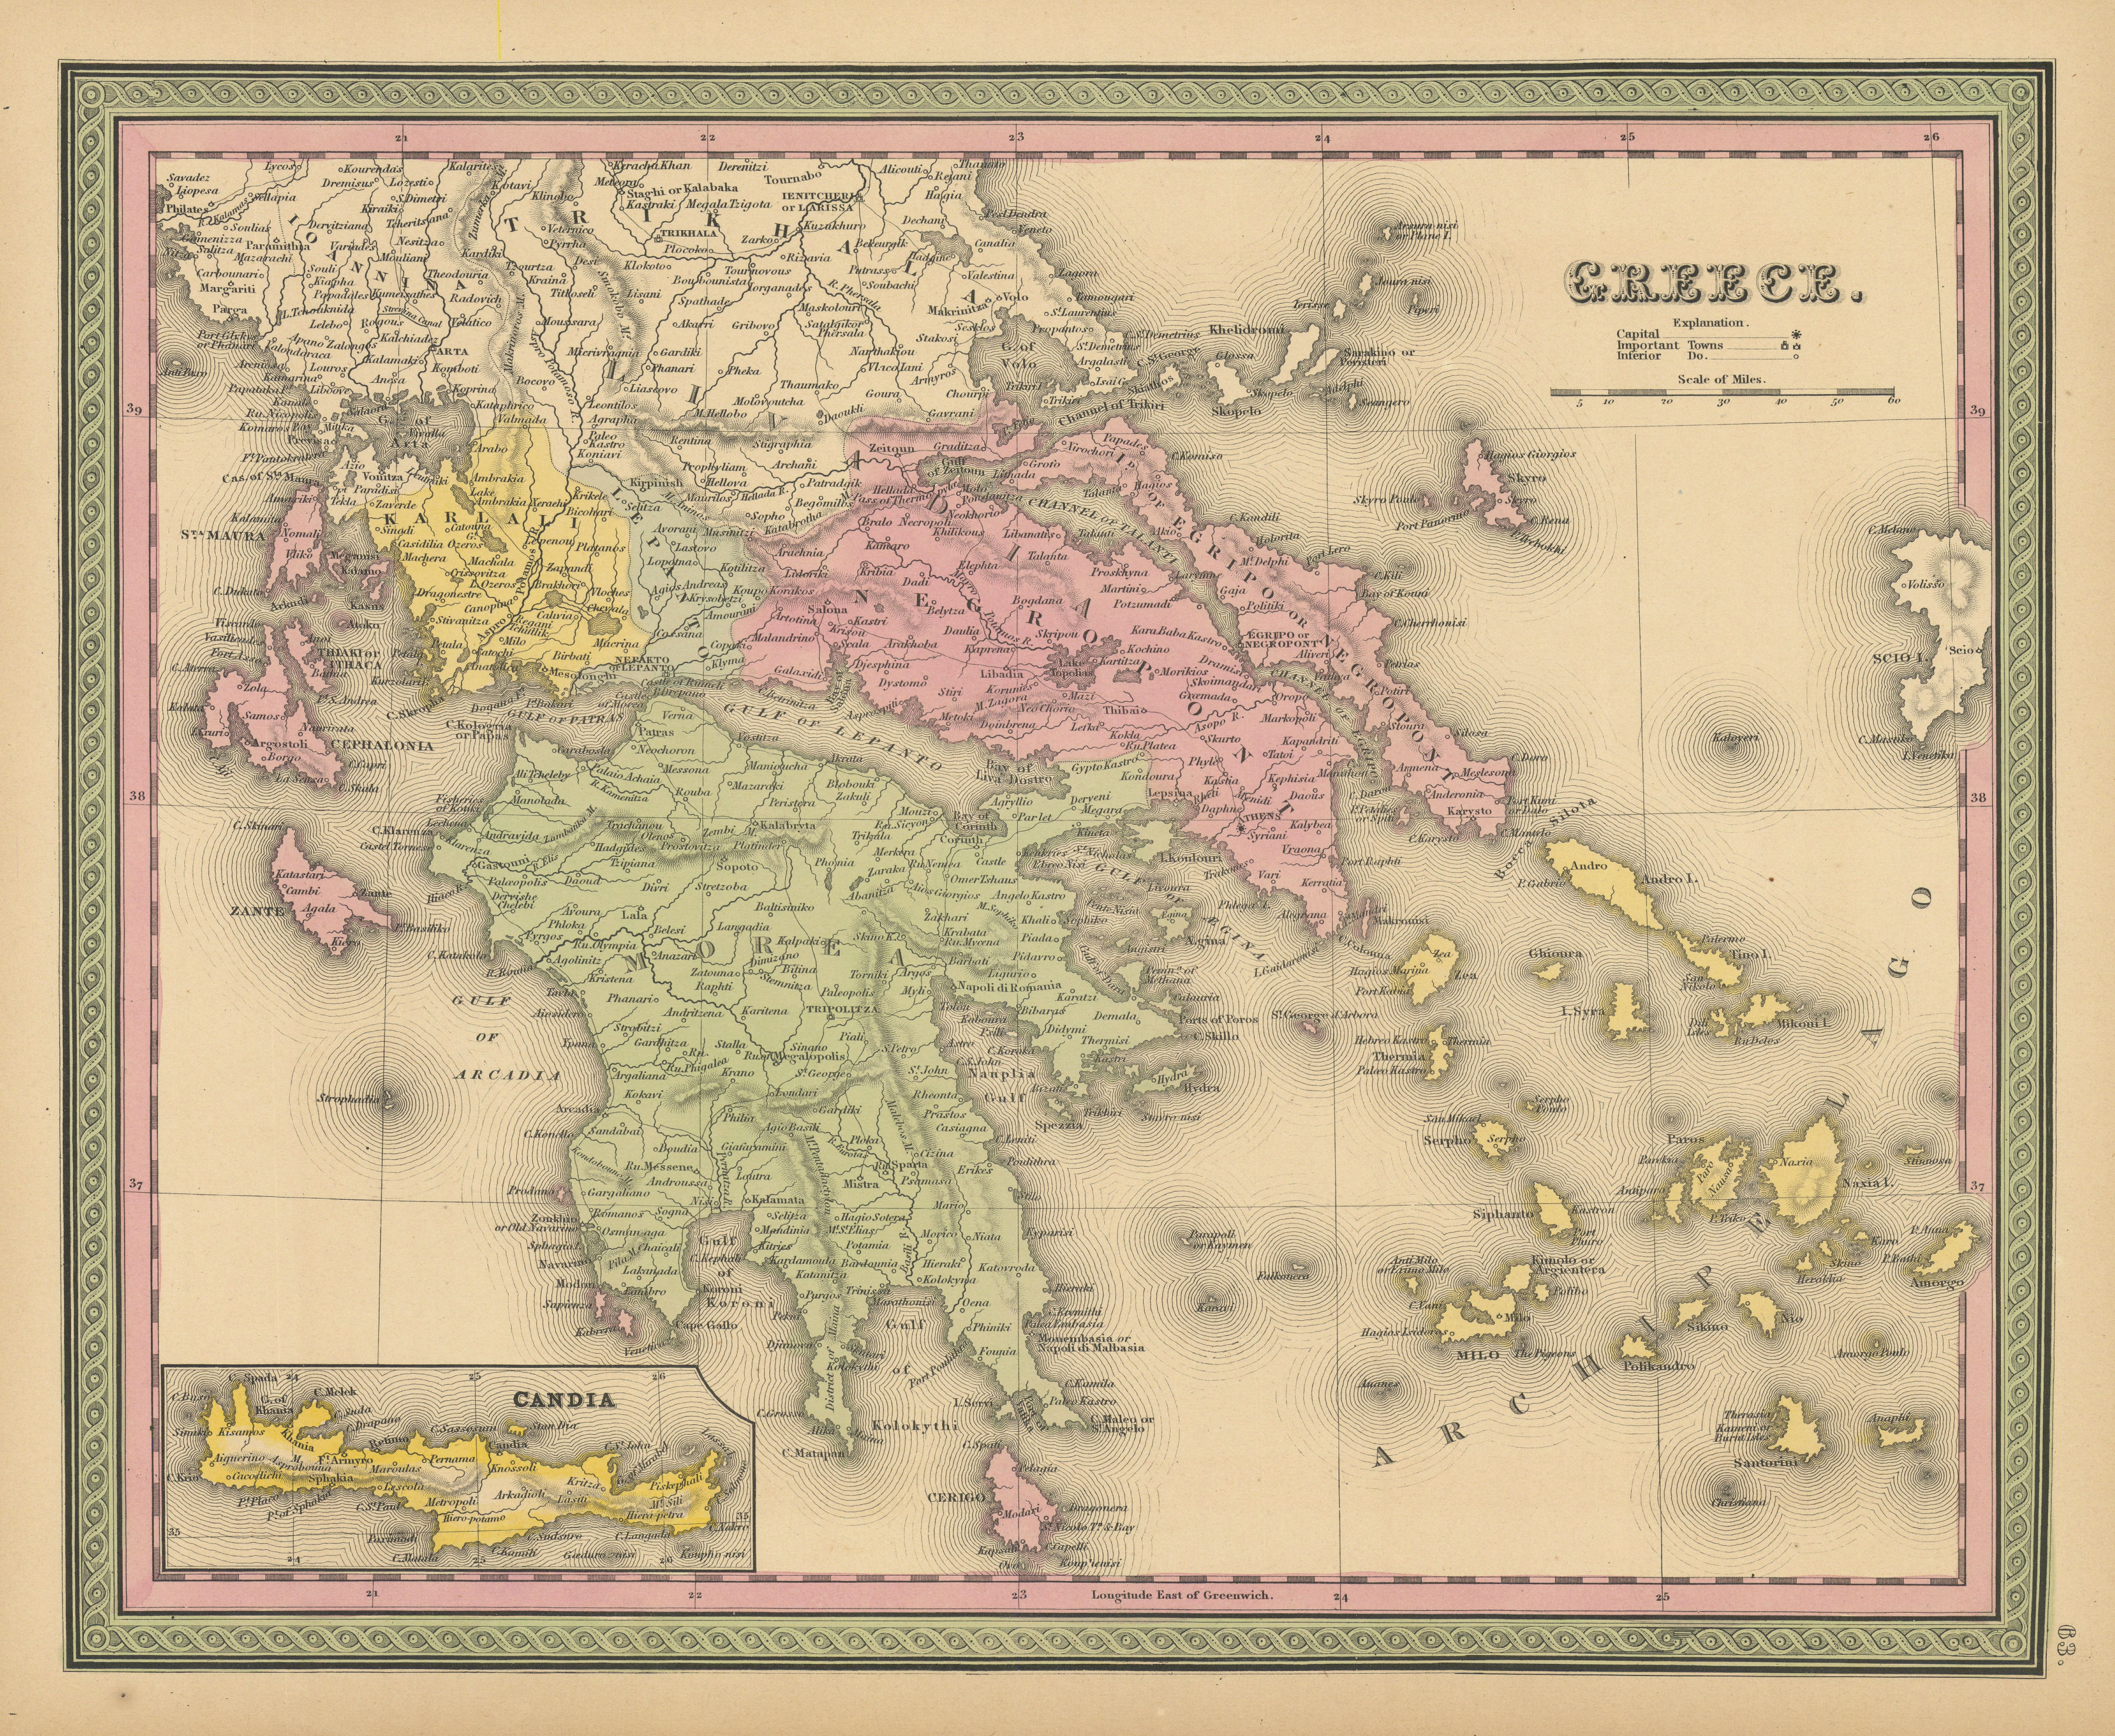 Greece. Ionian Cyclades Sporades islands. THOMAS, COWPERTHWAIT 1852 old map